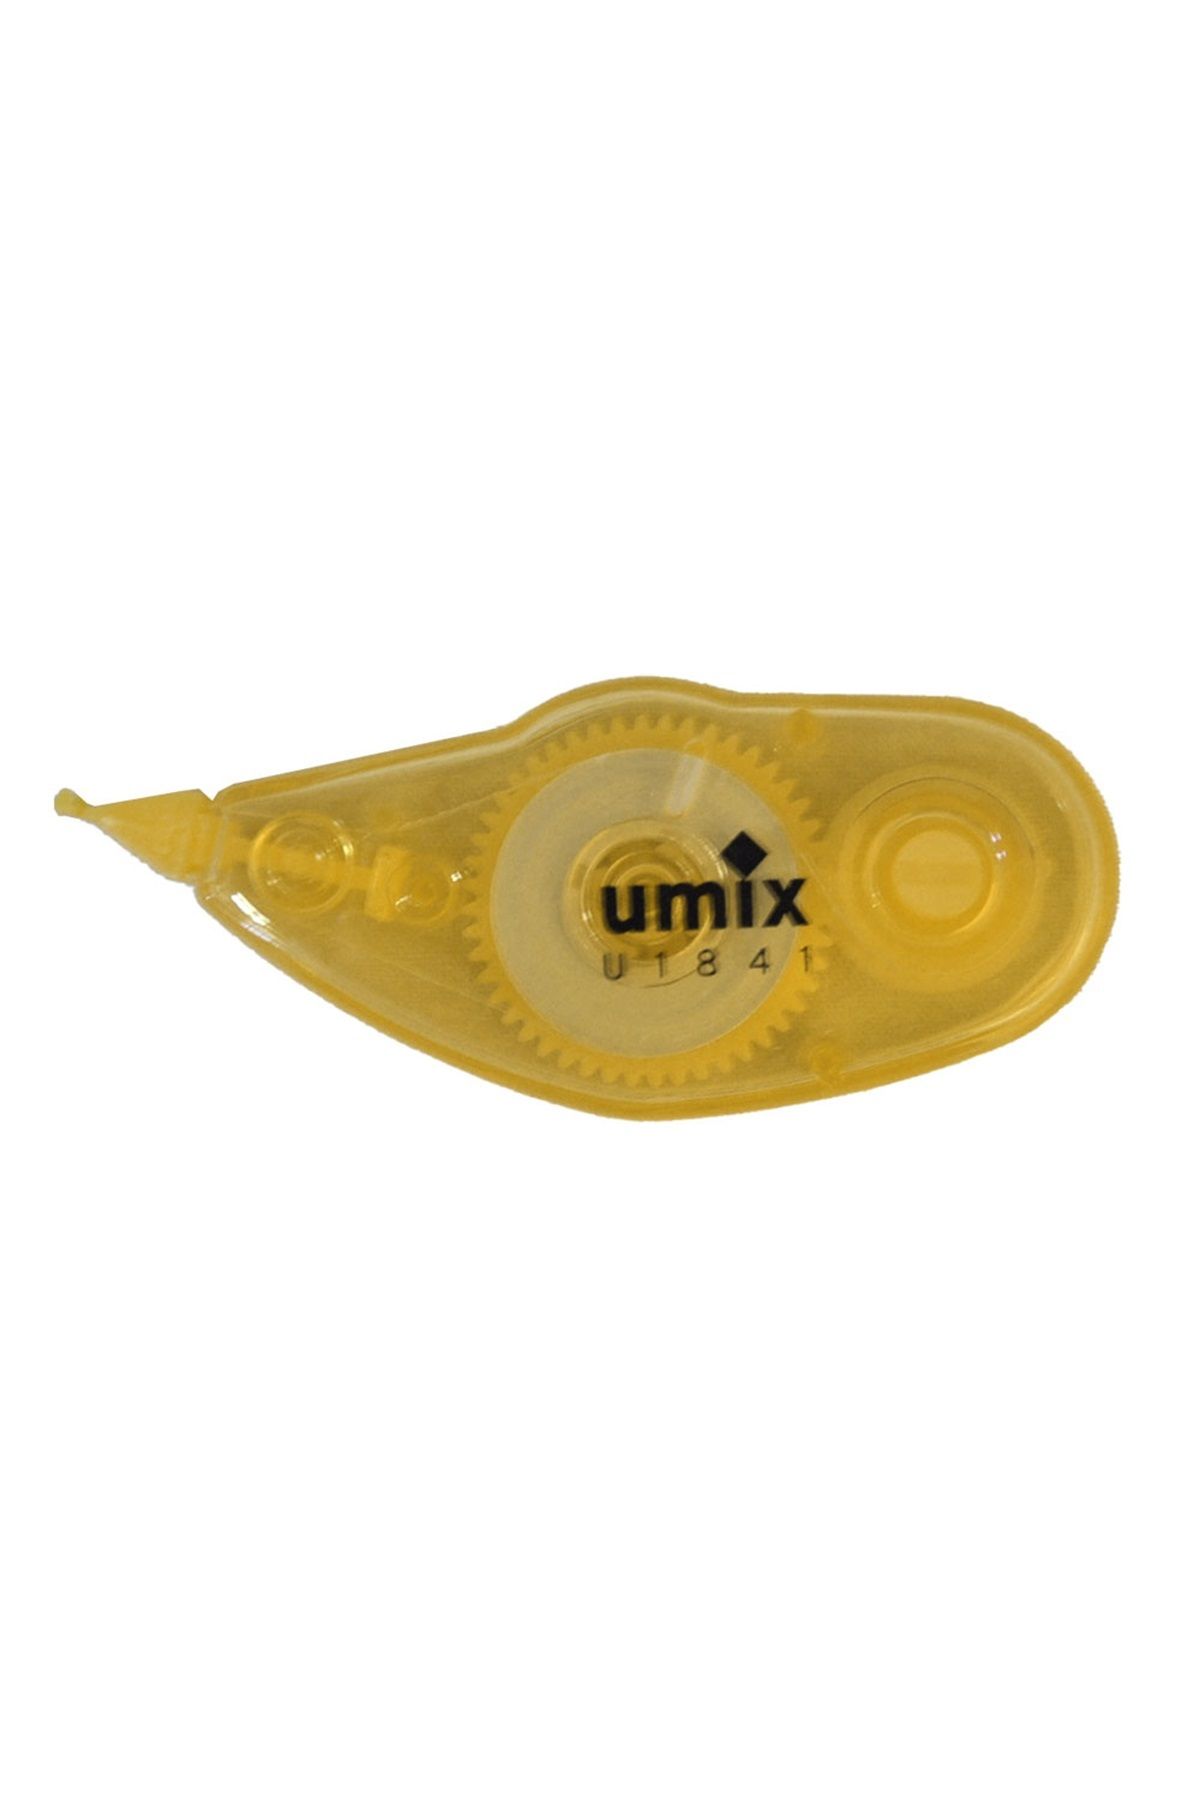 Umix Şerit Silici 5x8mt - Sarı